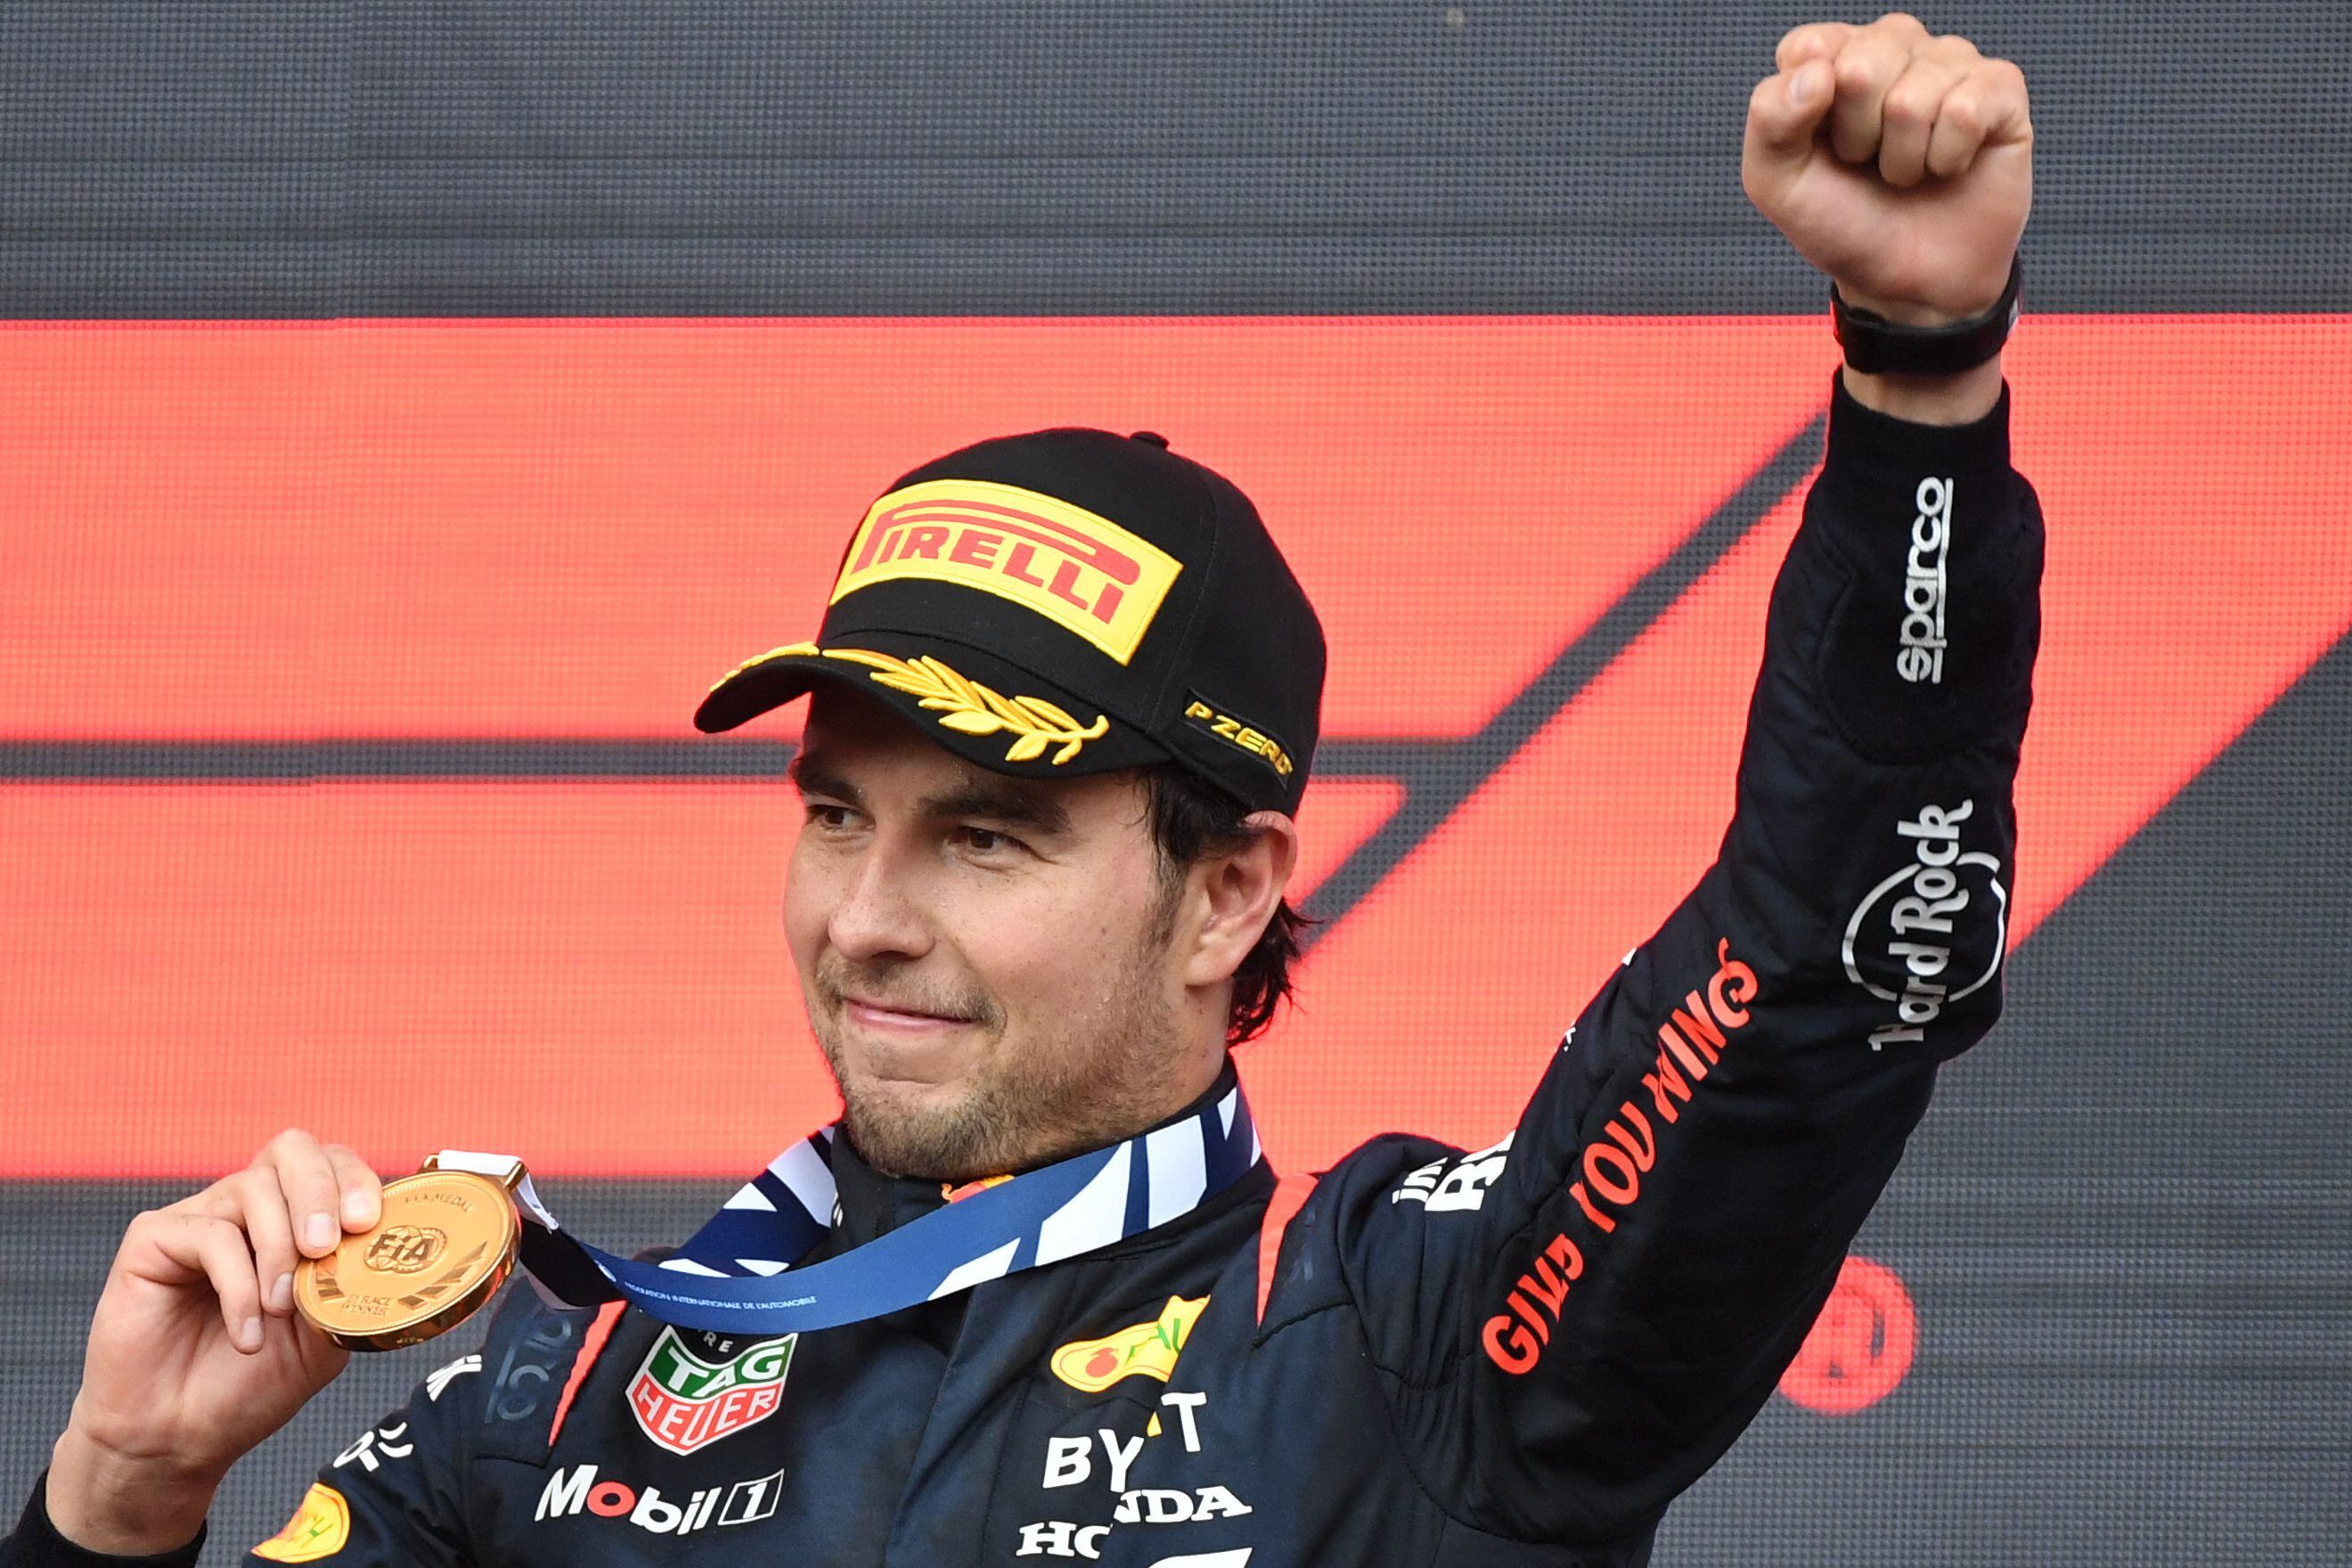 Red Bull Racing's Mexican driver Sergio Perez celebrates on the podium after winning the Formula One Azerbaijan Grand Prix at the Baku City Circuit in Baku on April 30, 2023. (Photo by NATALIA KOLESNIKOVA / AFP)